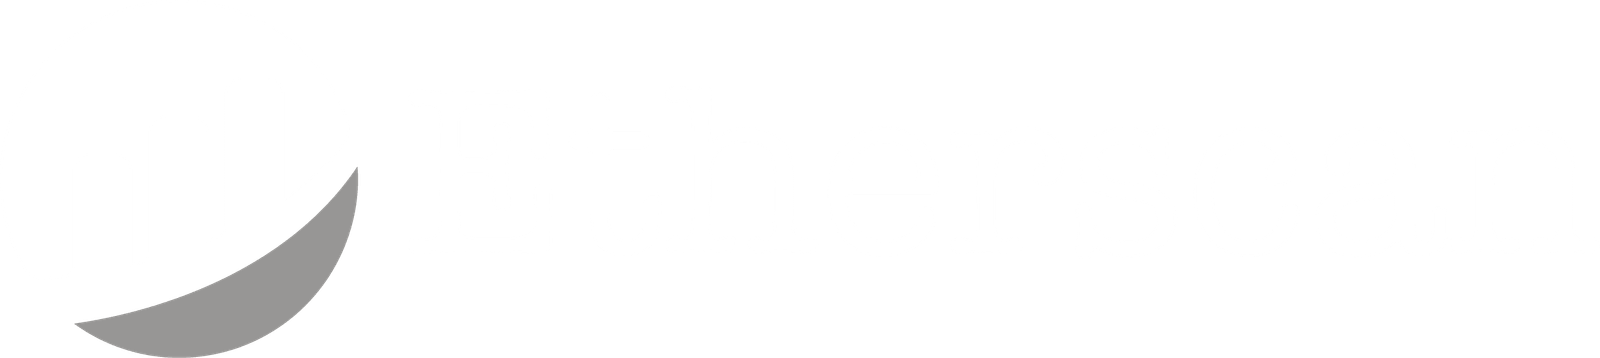 Etherscan-logo